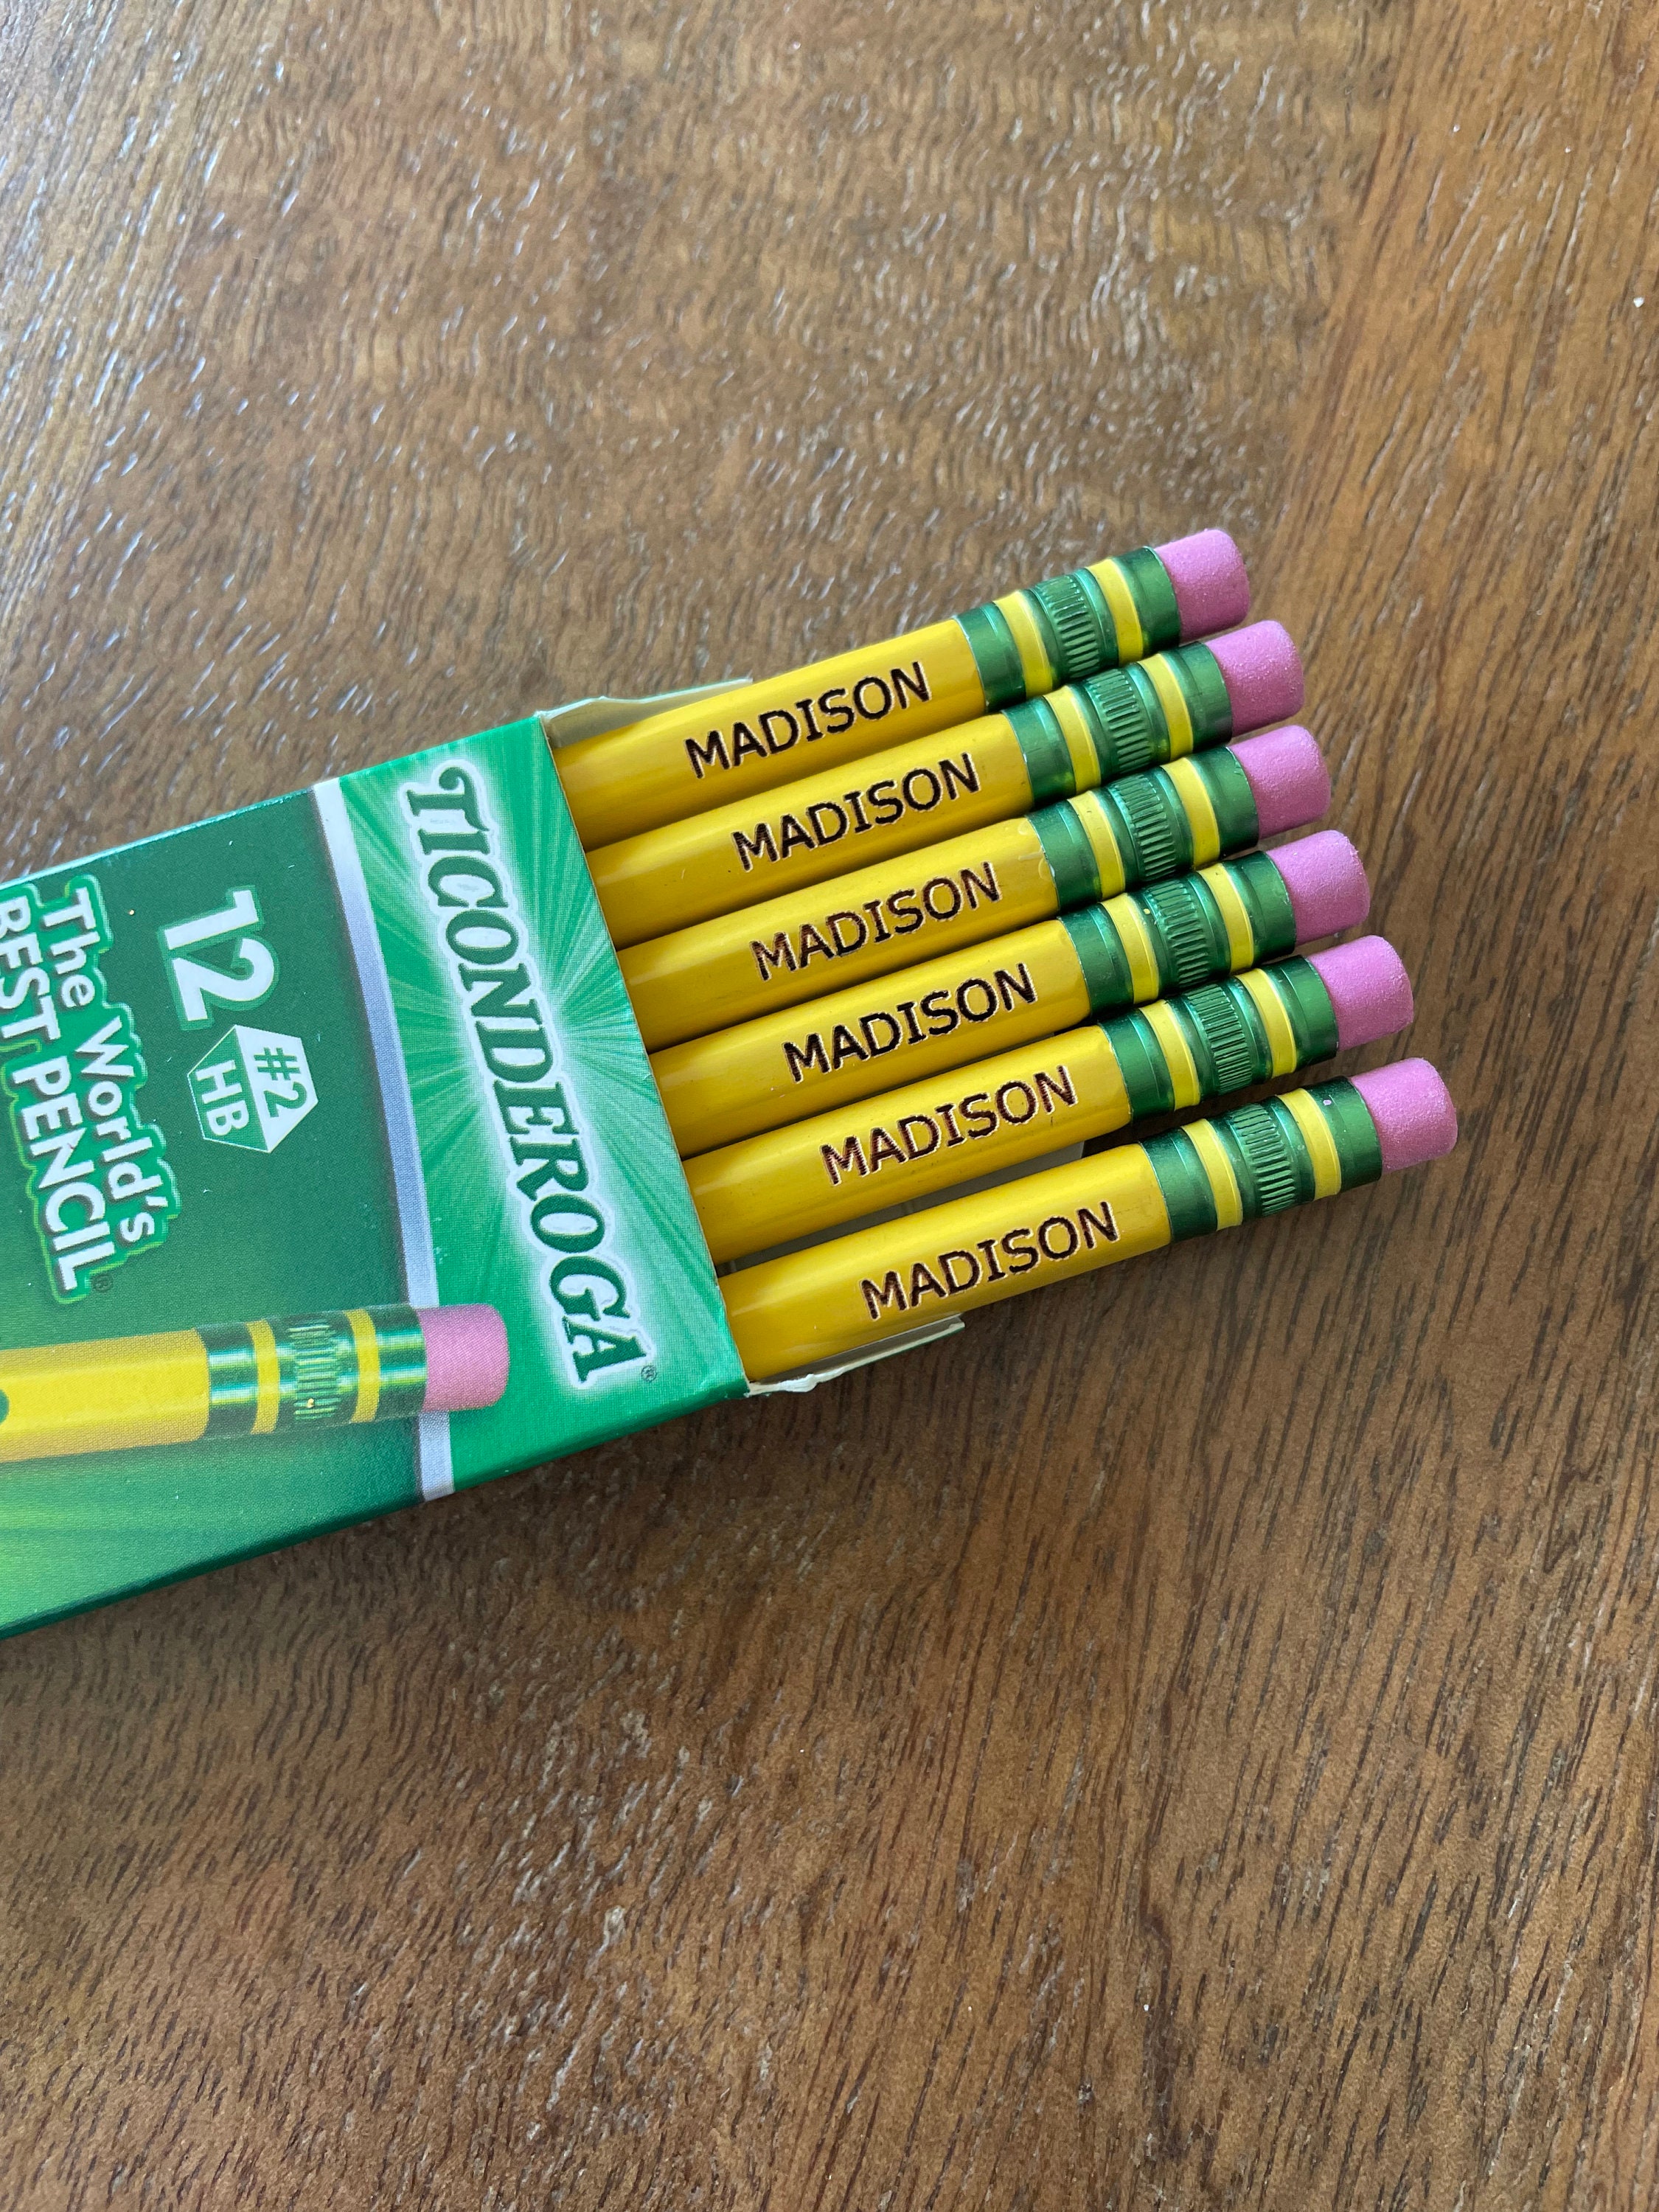 Engraved Ticonderoga Neon Pencils - Presharpened